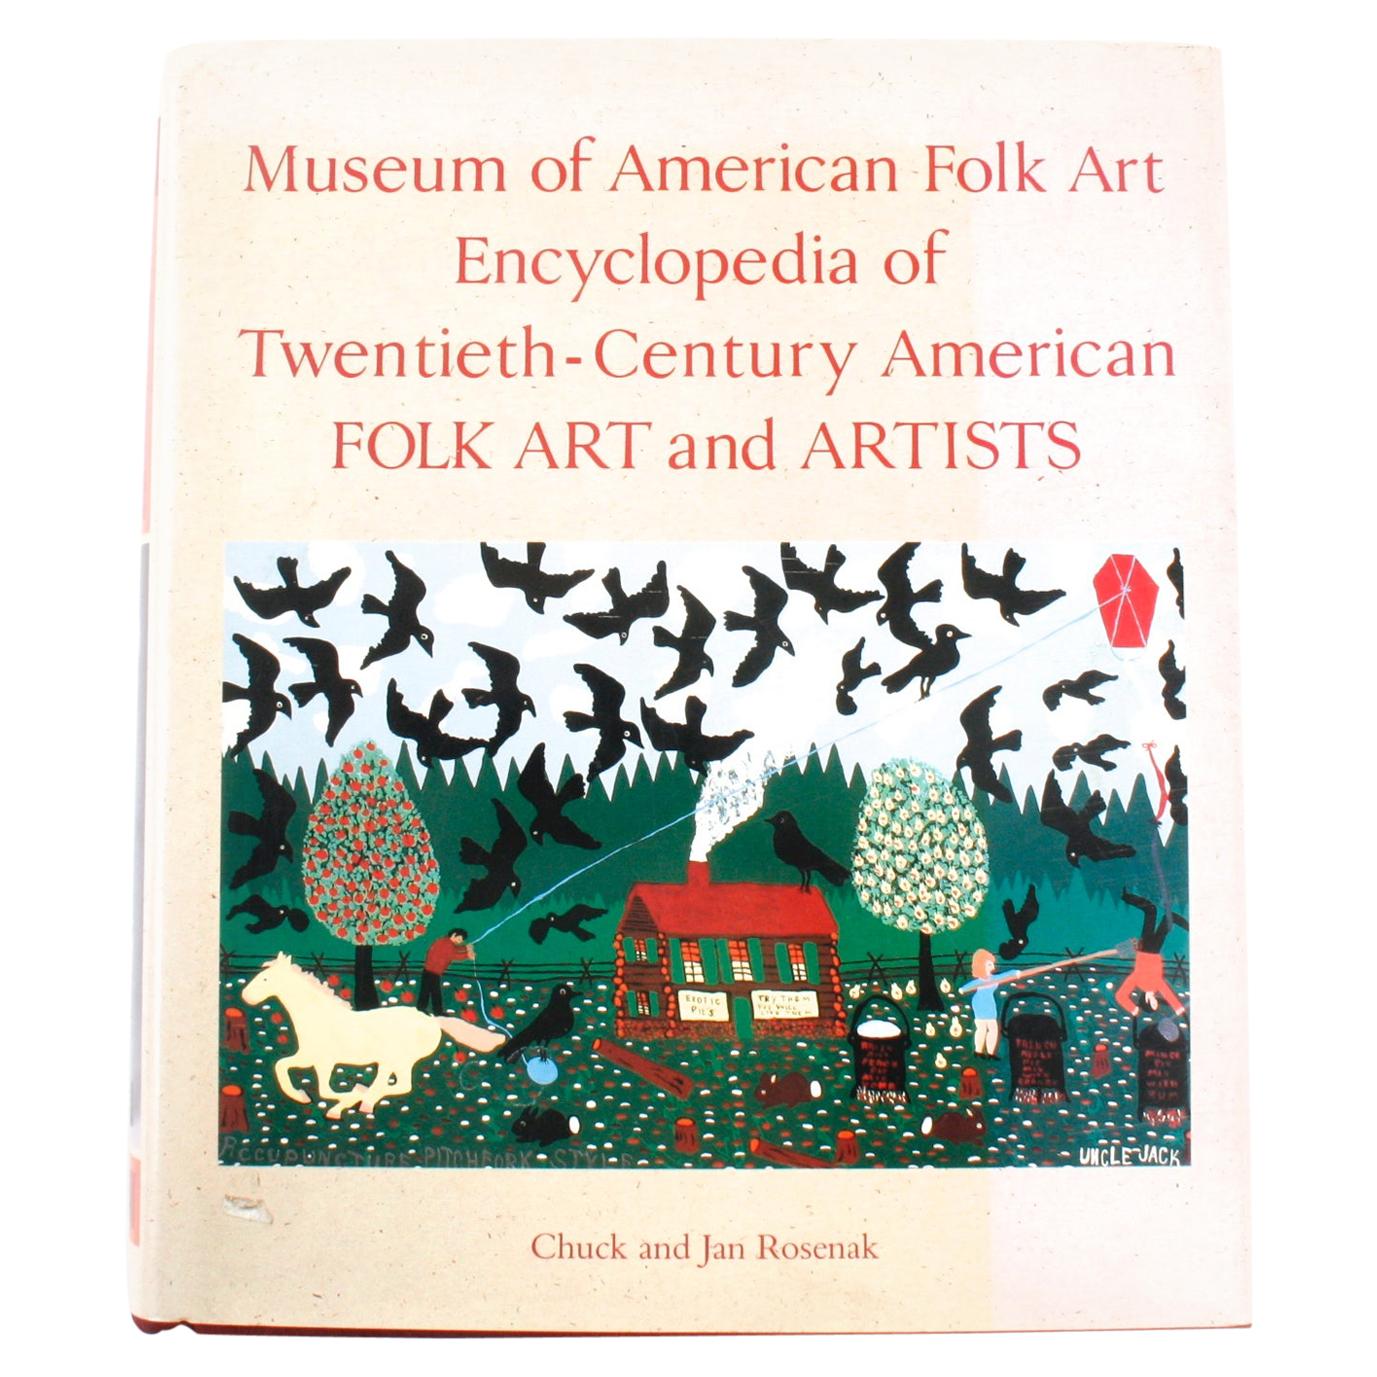 Museum of American Folk Art, Encyclopaedia of 20th Century Folk Art & Artists